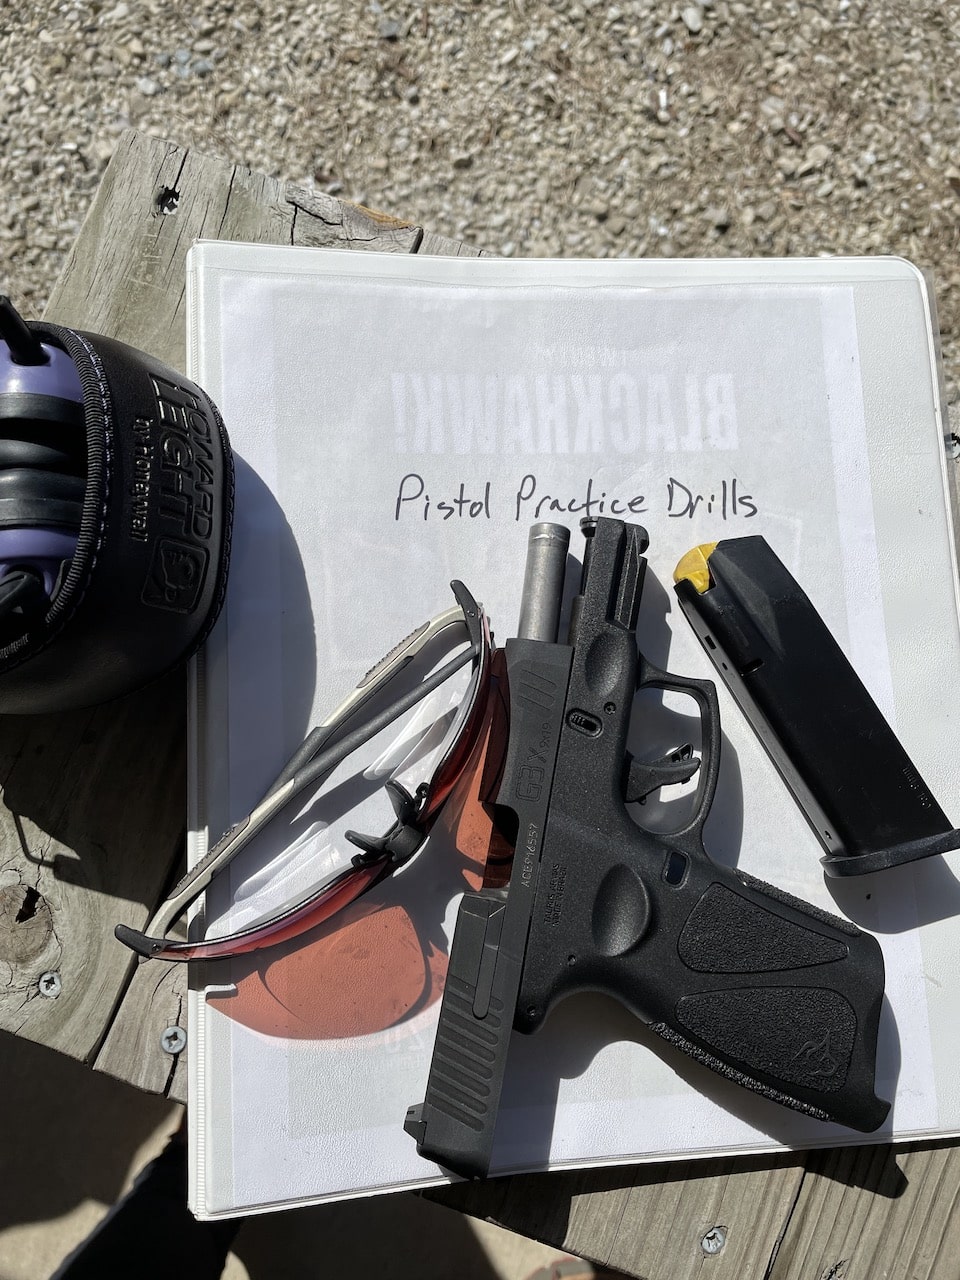 Taurus G3X with pistol drill book